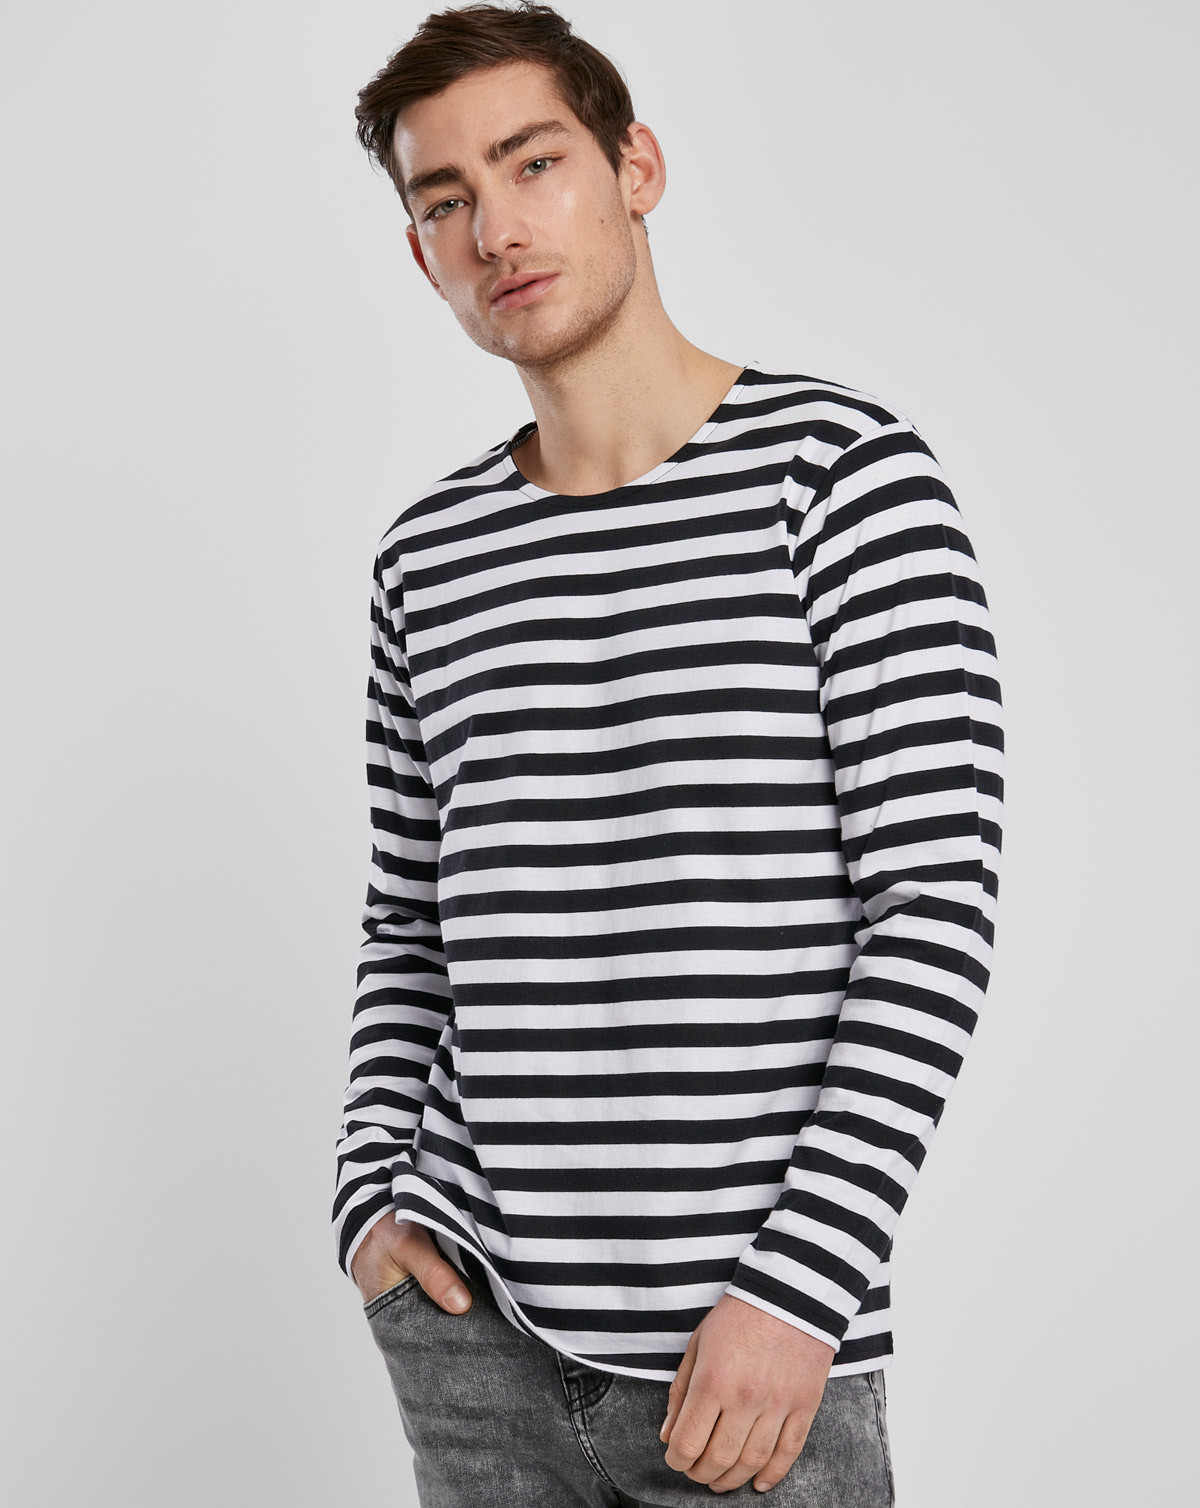 Urban Classics Regular StripeLong Sleeve T-Shirt (Hvid / Sort, S)